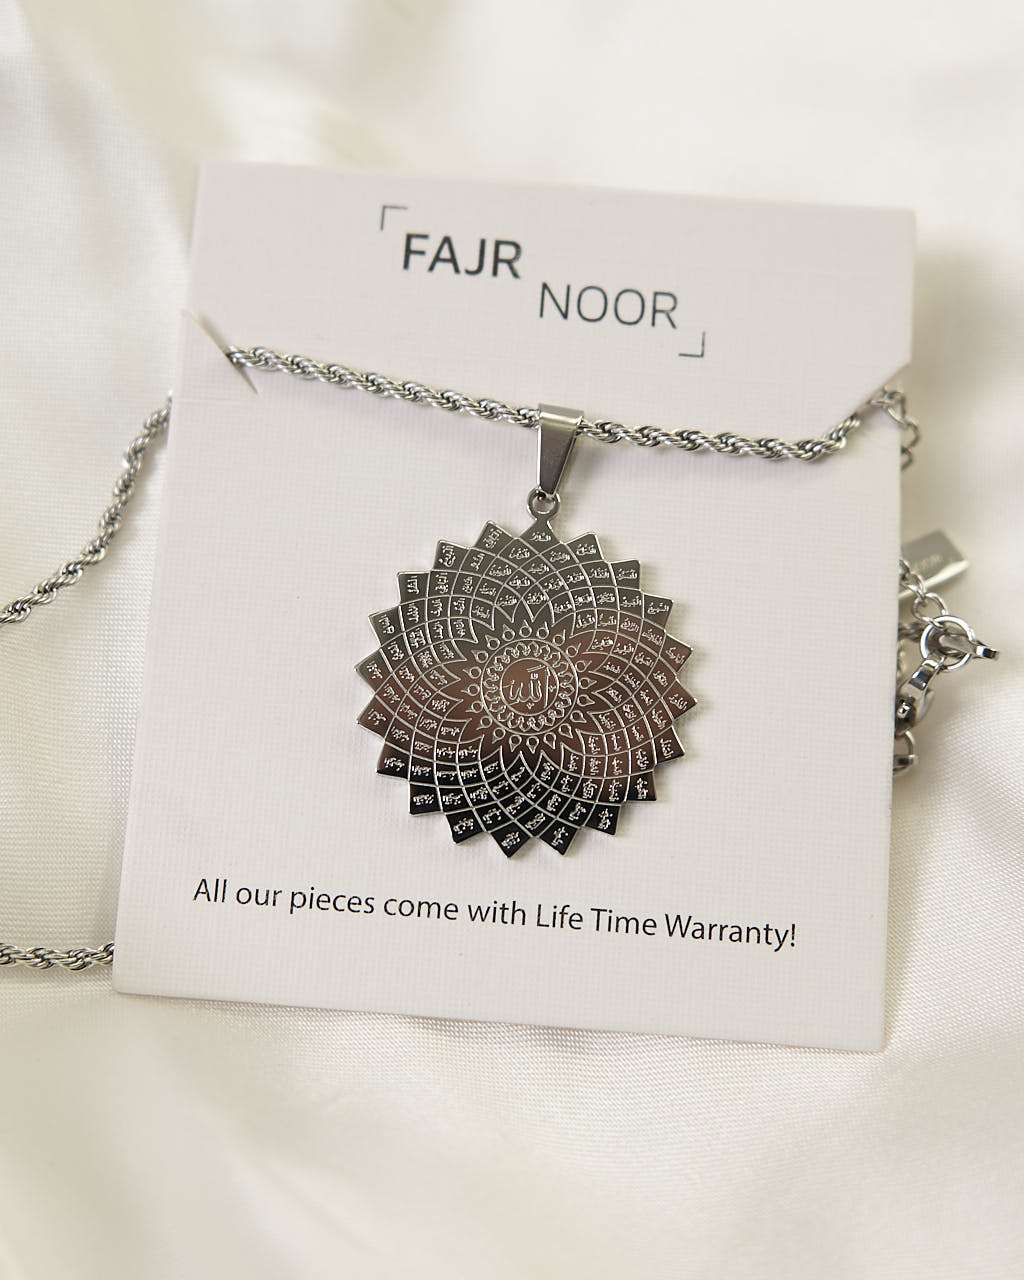 99 Names of Allah Necklace - Necklace - Fajr Noor